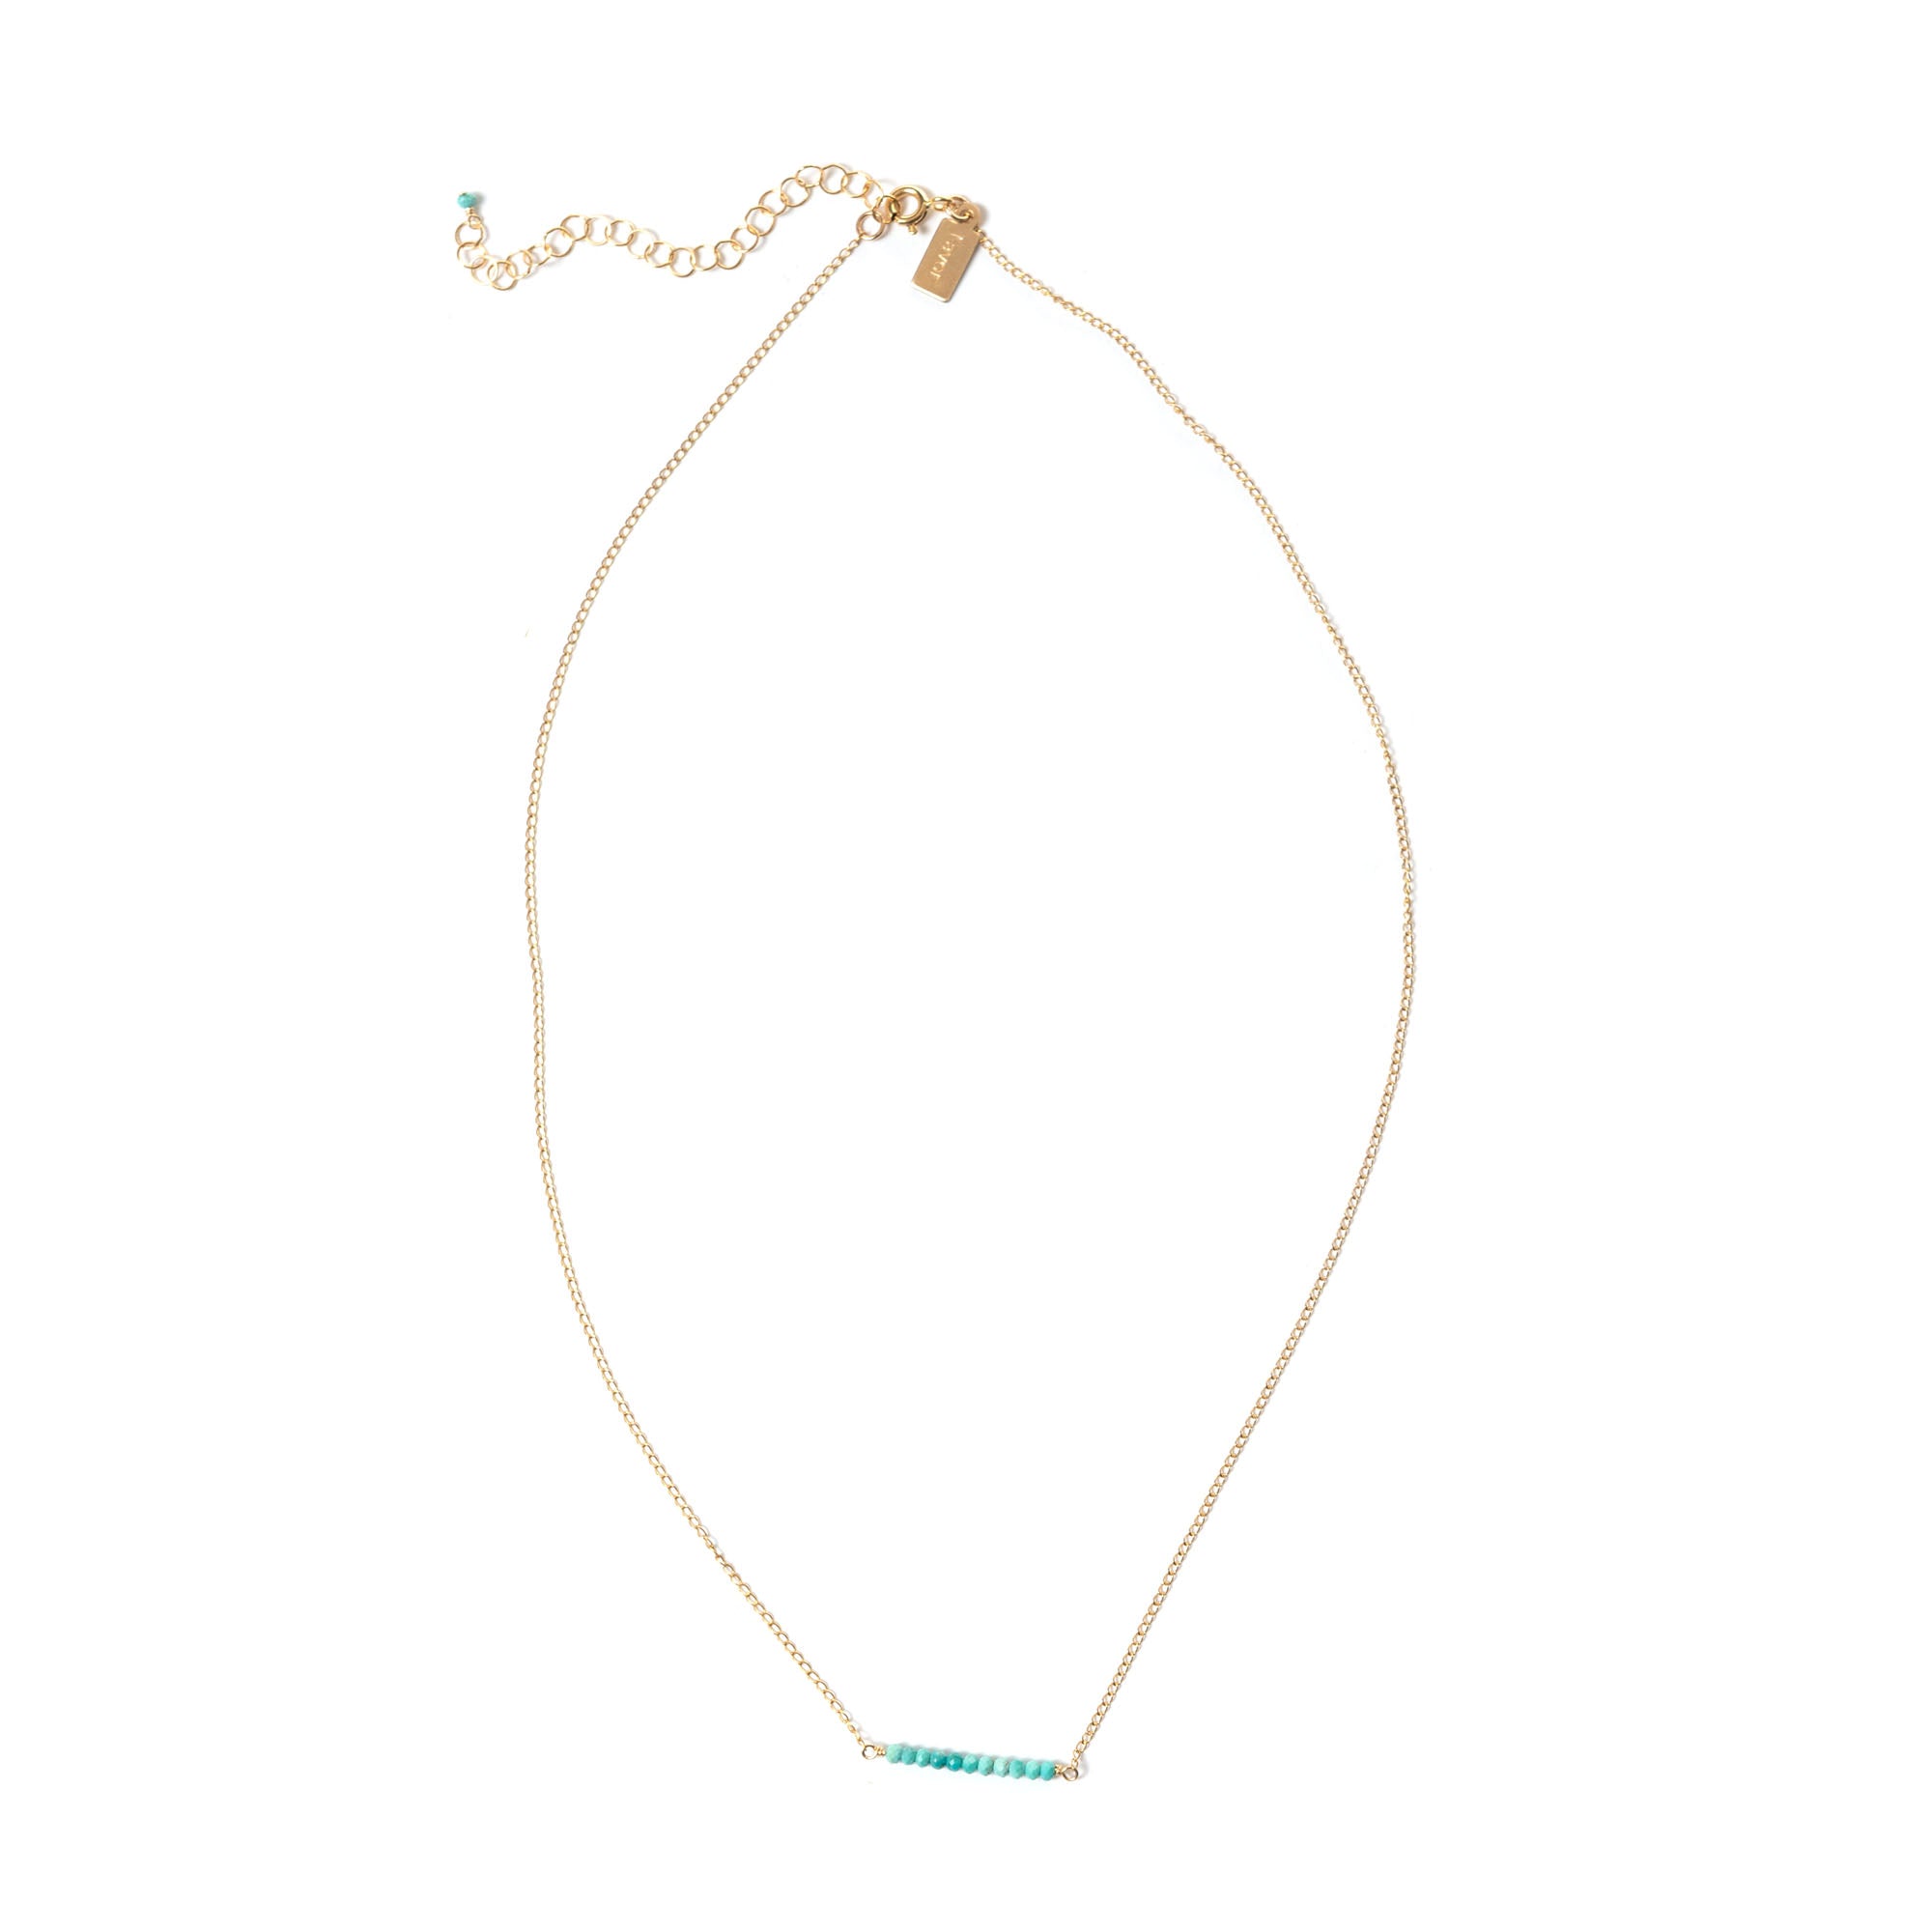 Tiny Turquoise Gemstone Necklace - Favor Jewelry